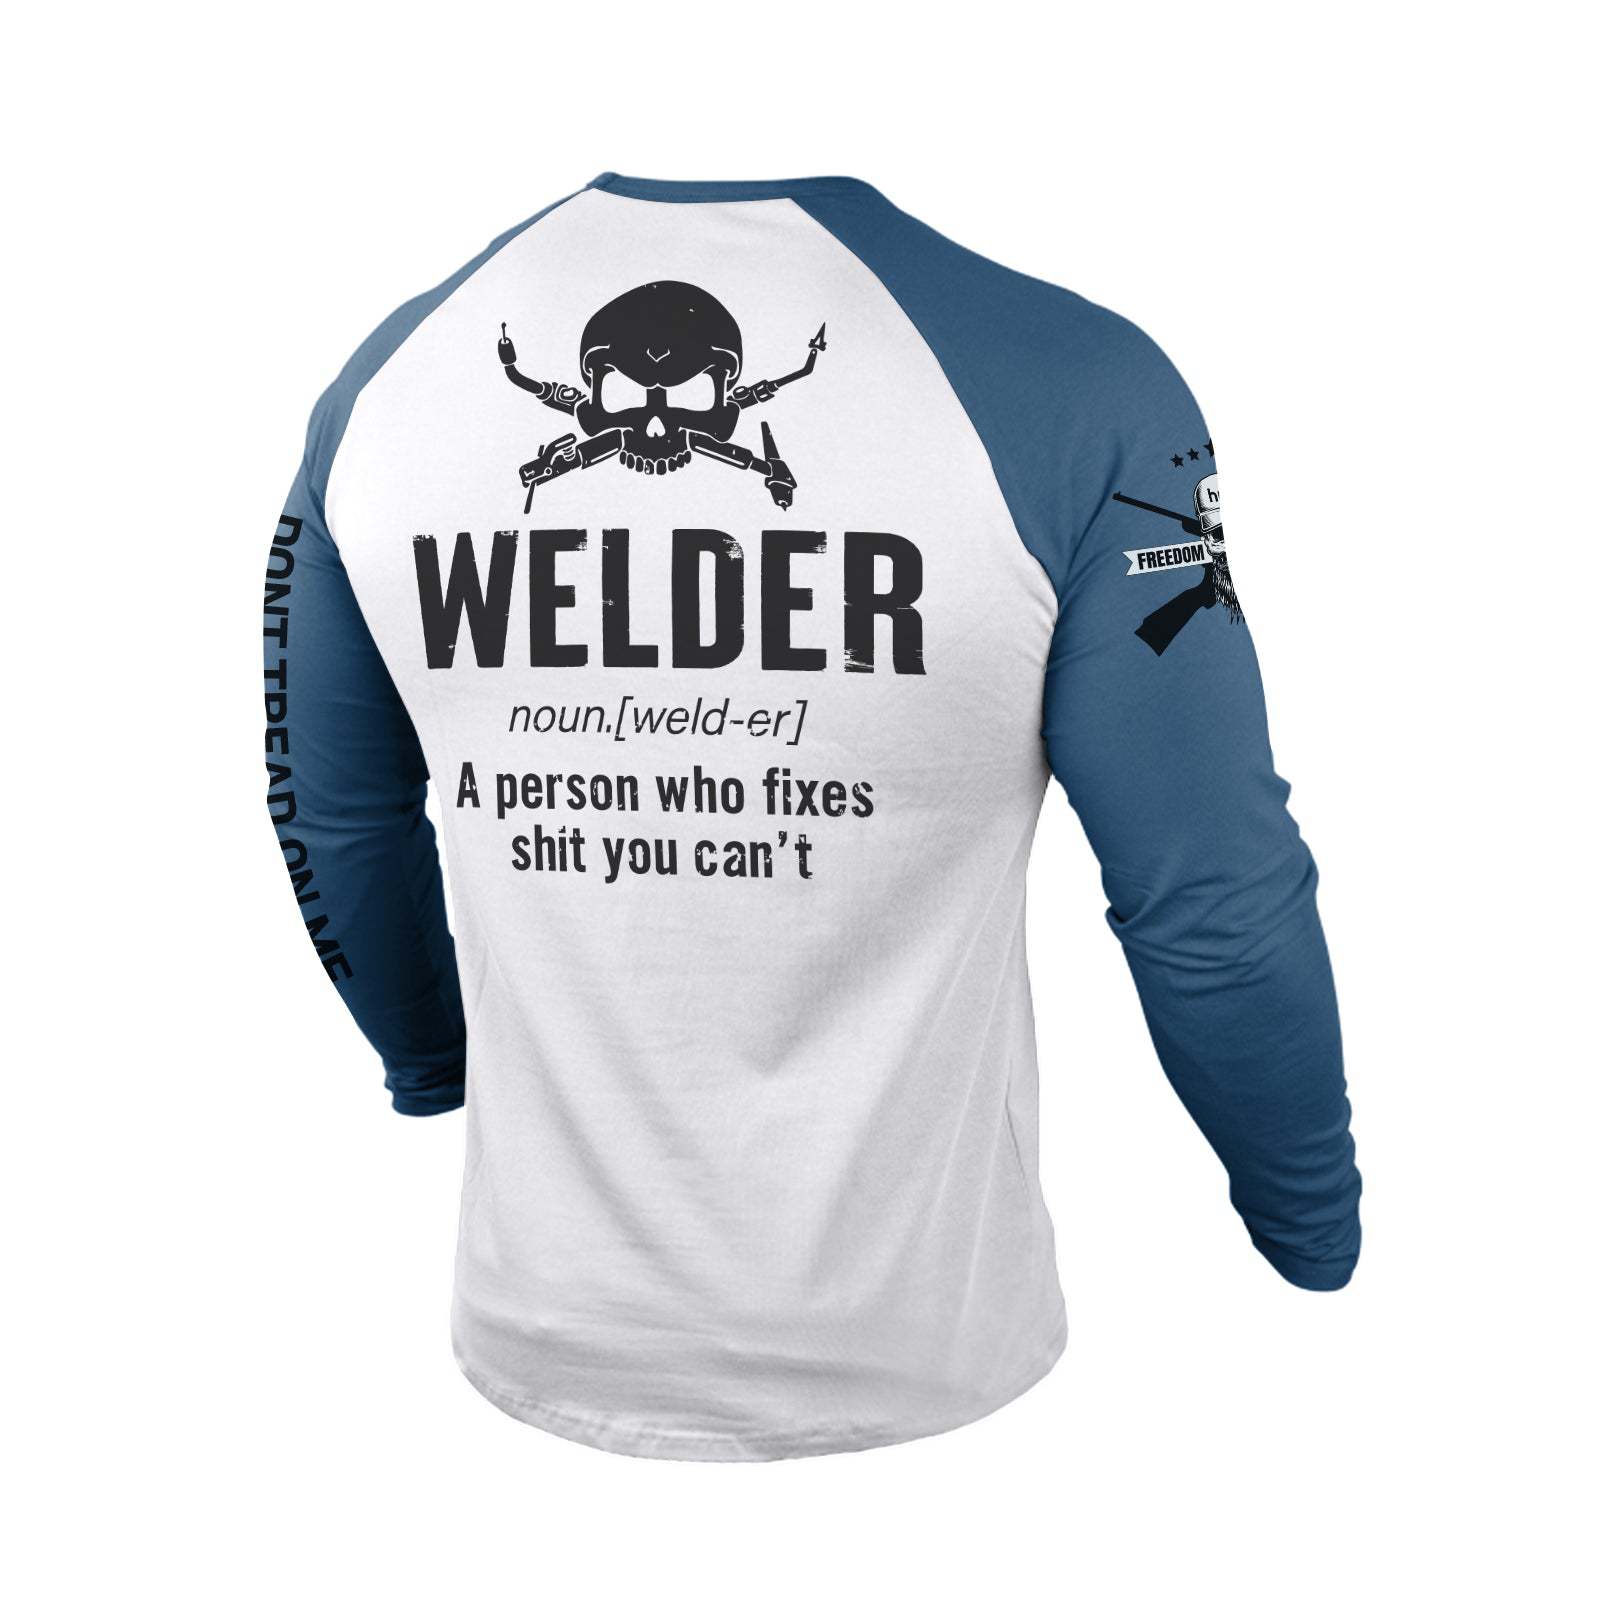 Welder Men's Shirt Chic